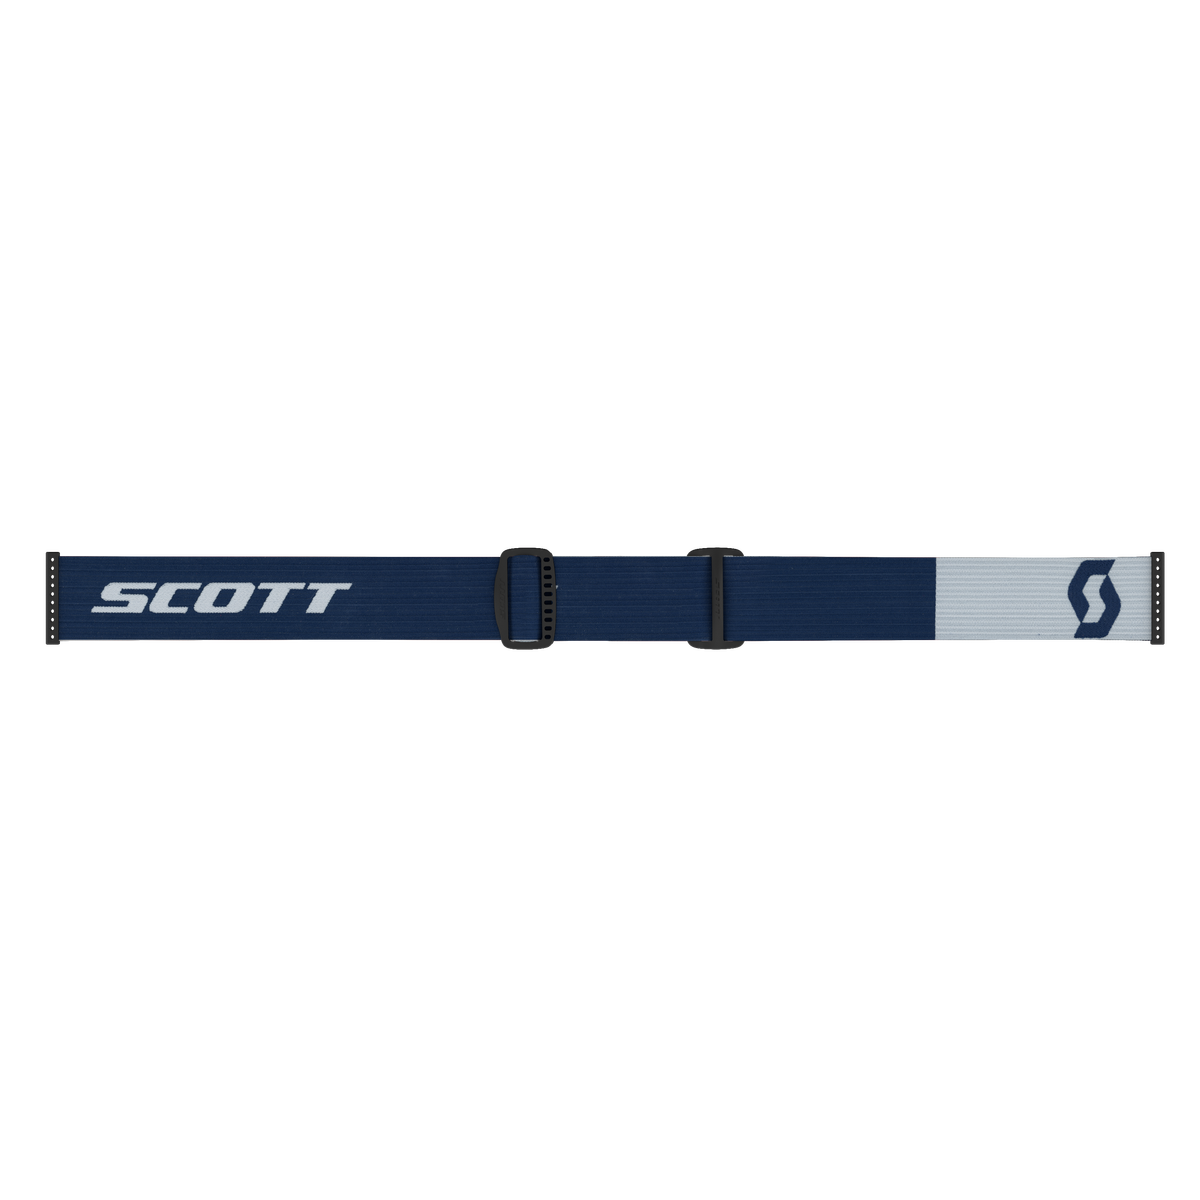 Scott LCG Evo skibril blauw/grijs + extra S1 lens